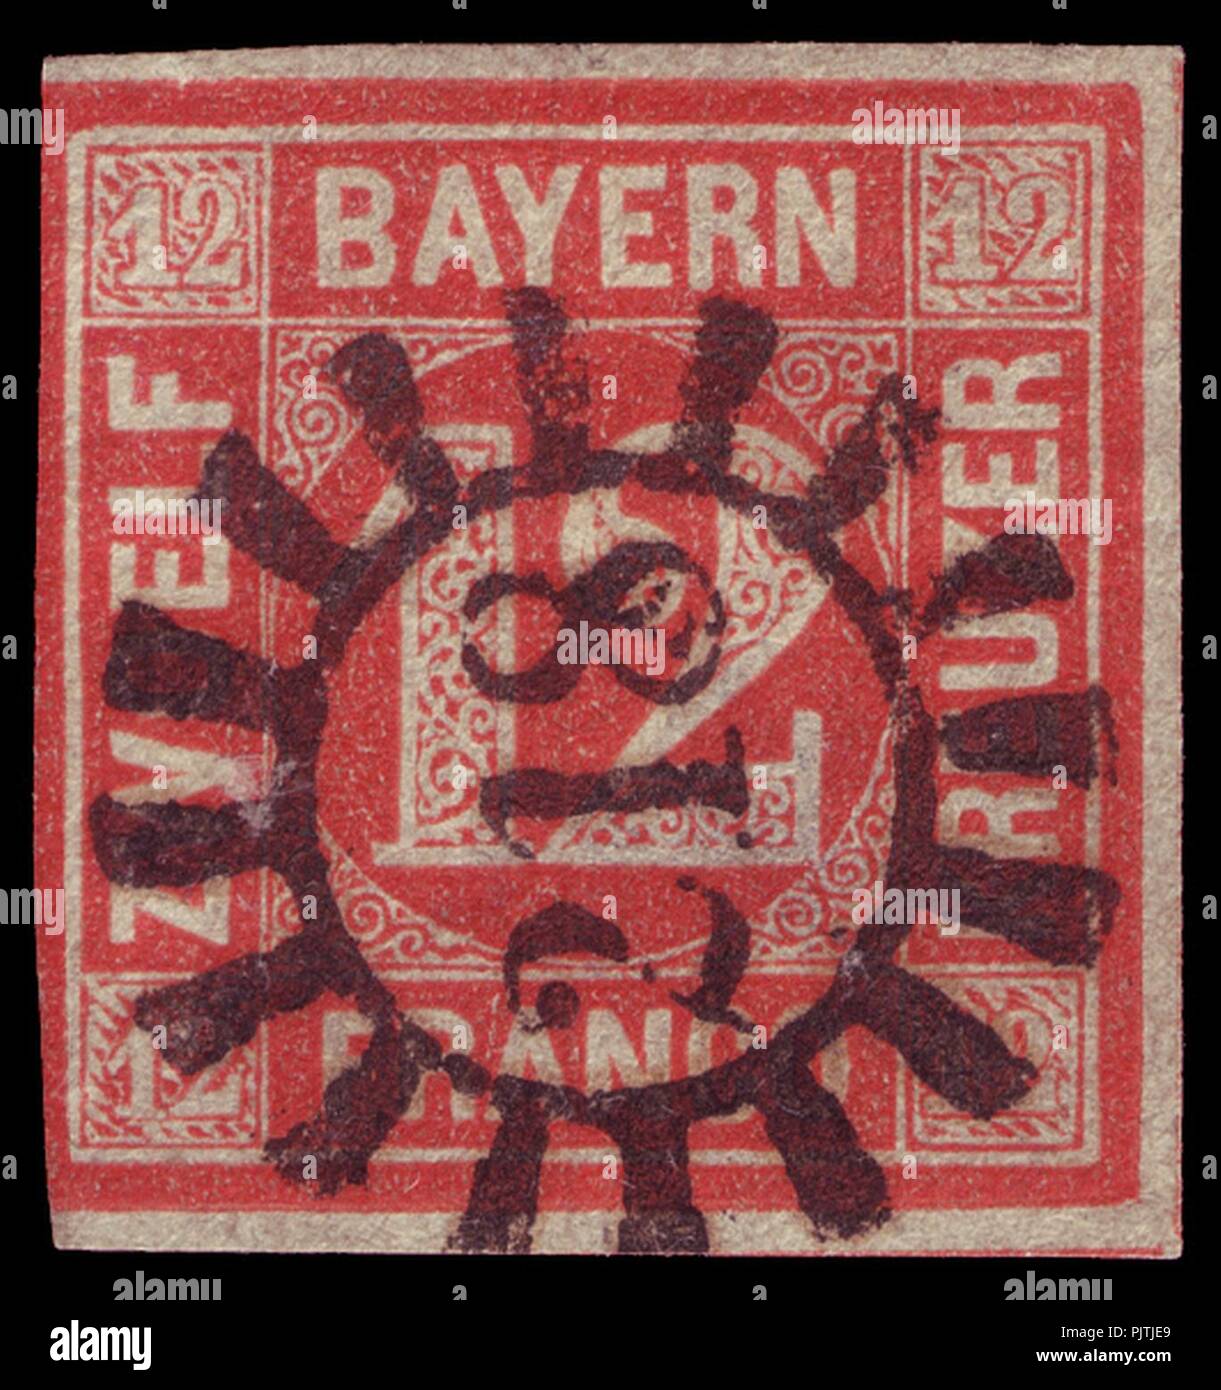 Bayern 1858 6 12 Kreuzer. Stockfoto